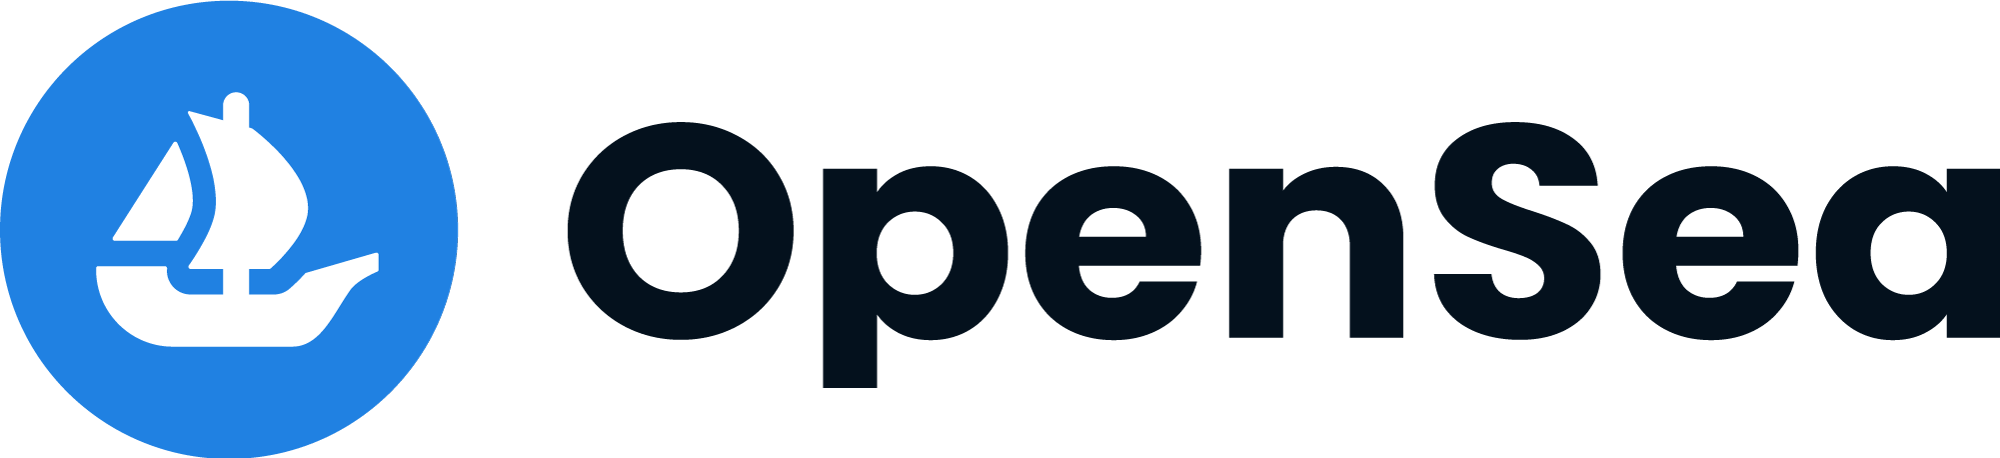 OpenSea Logo PNG title=